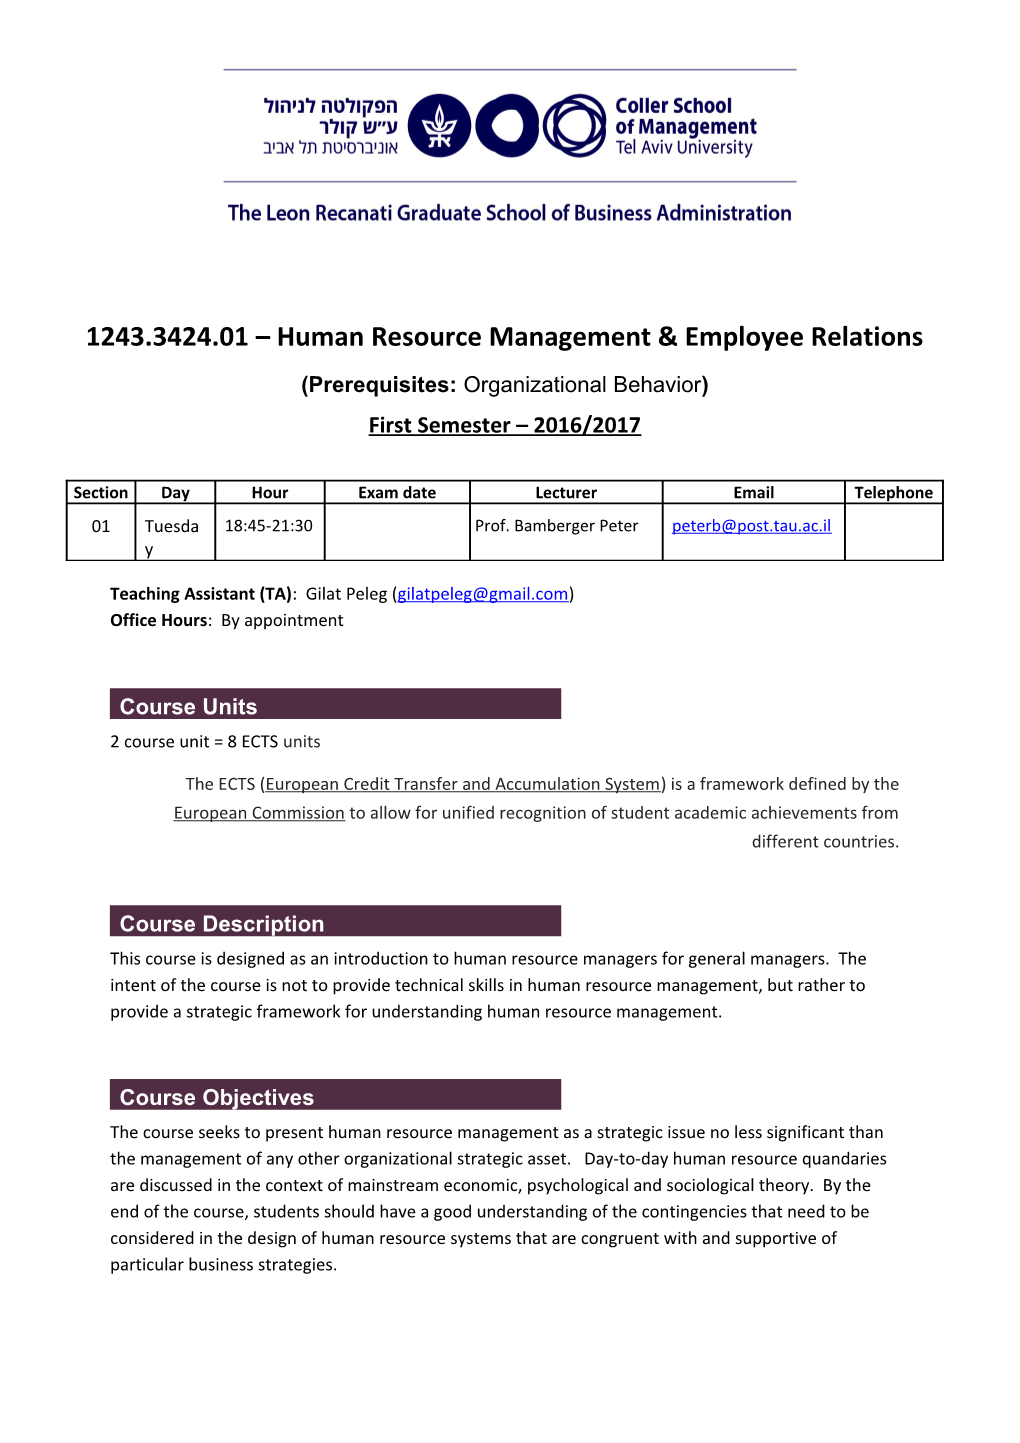 1243.3424.01 Human Resource Management & Employee Relations